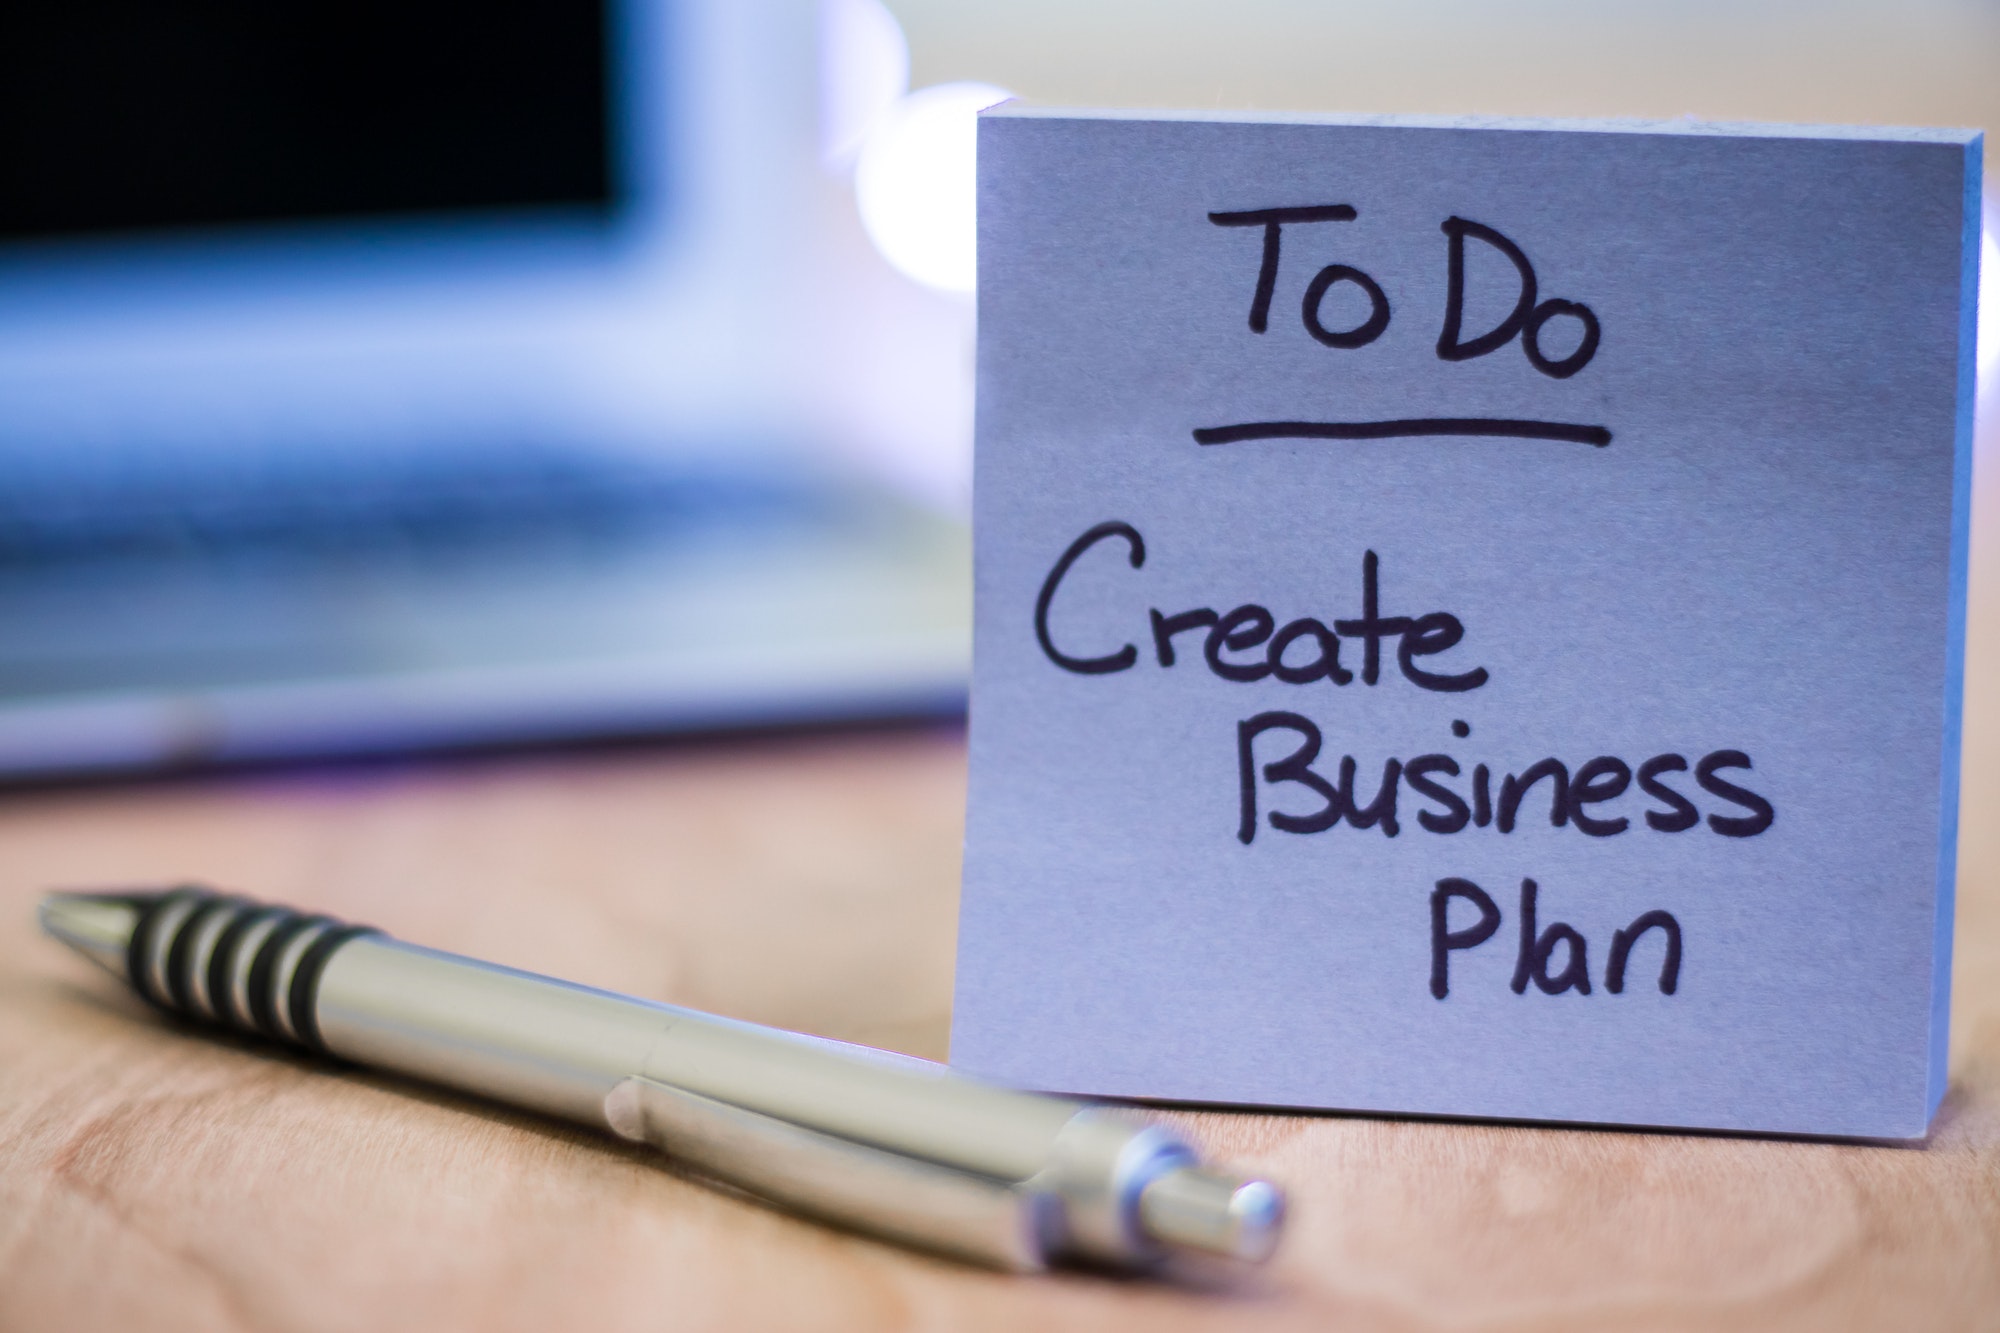 Create business plan